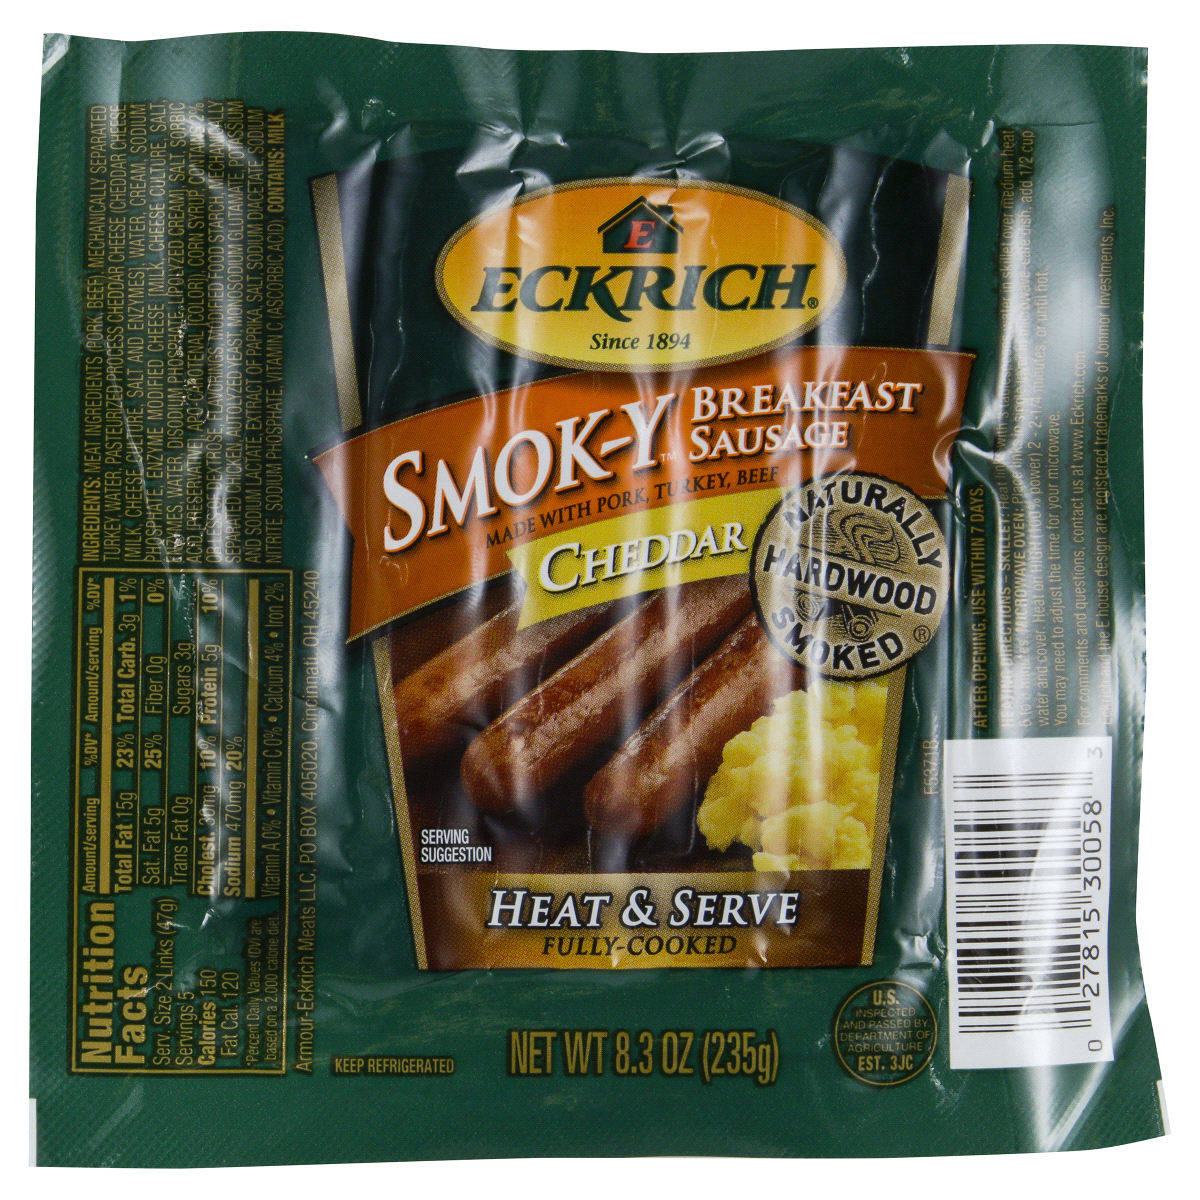 slide 1 of 7, Eckrich Smok-y Cheddar Breakfast Sausage, 8.3 oz